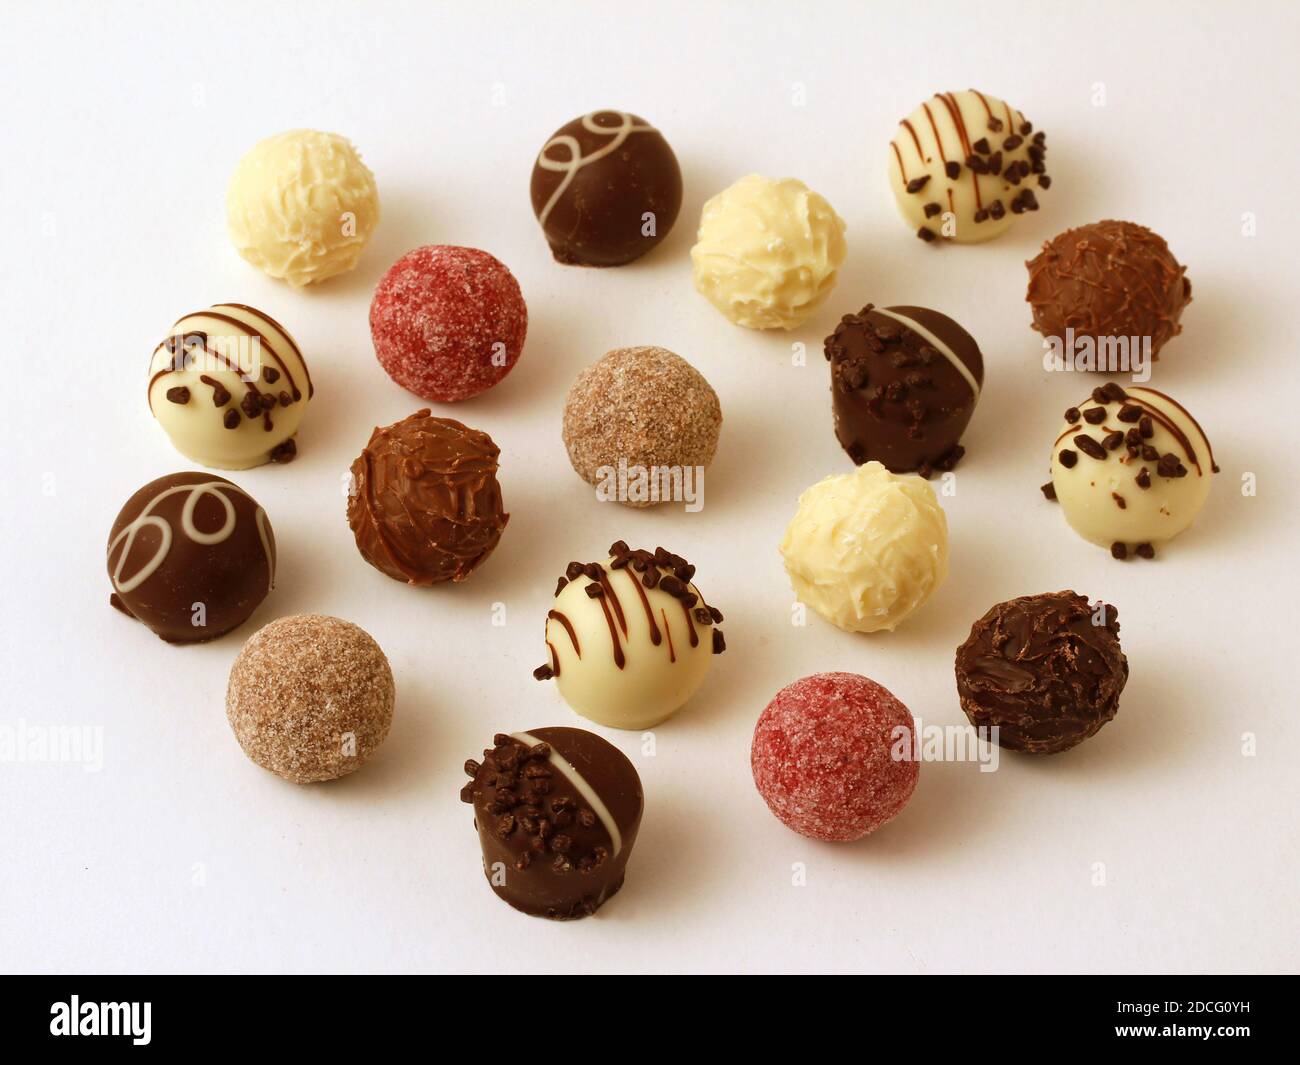 Bonbons. Stock Photo